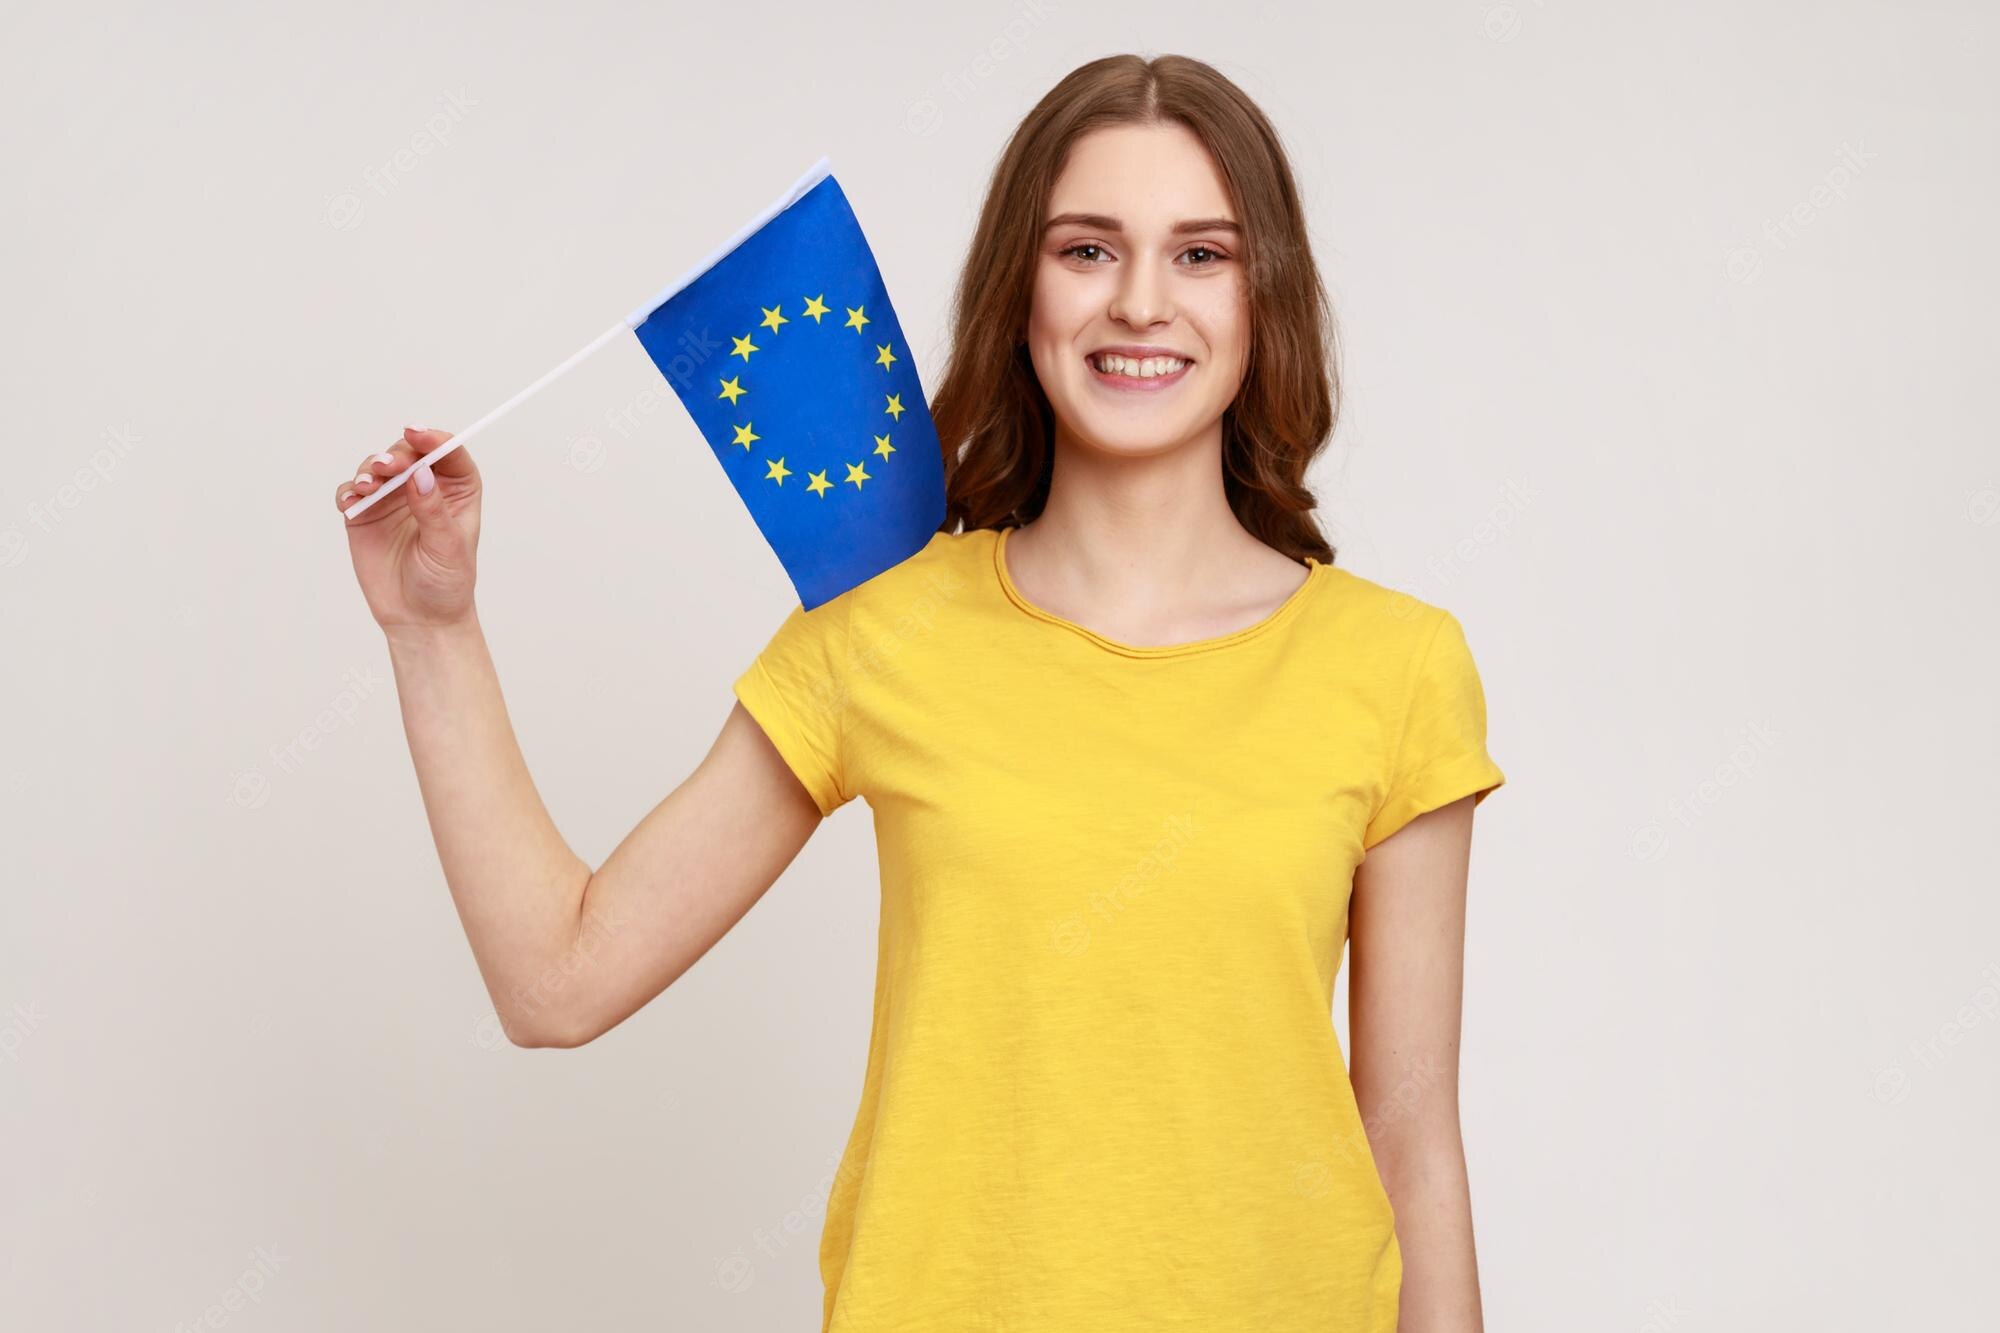 How to get European citizenship